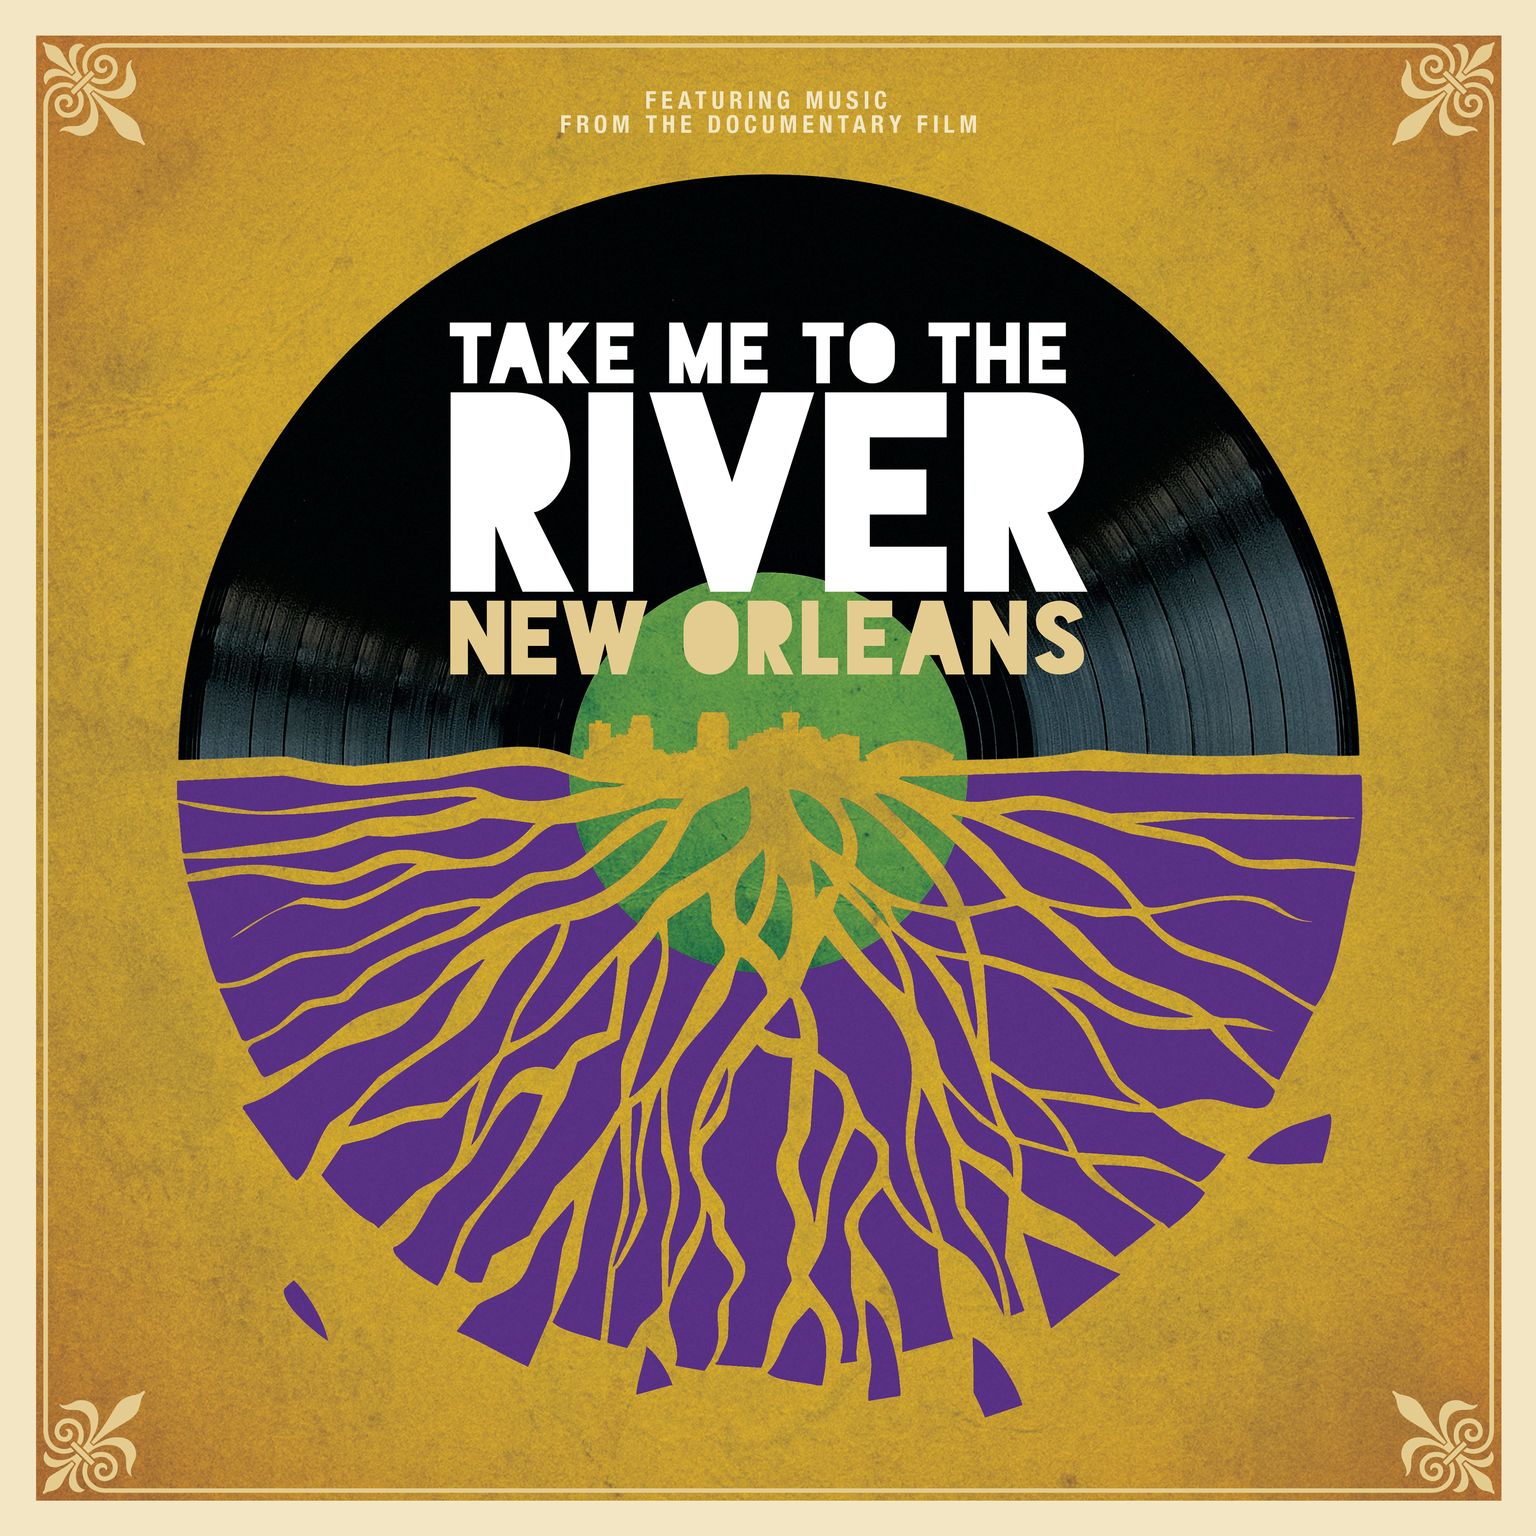 Take Me to The River: New Orleans ft. Dr. John, PJ Morton, G-Eazy, Big Freedia, Galactic, Christian Scott aTunde Adjuah, and more